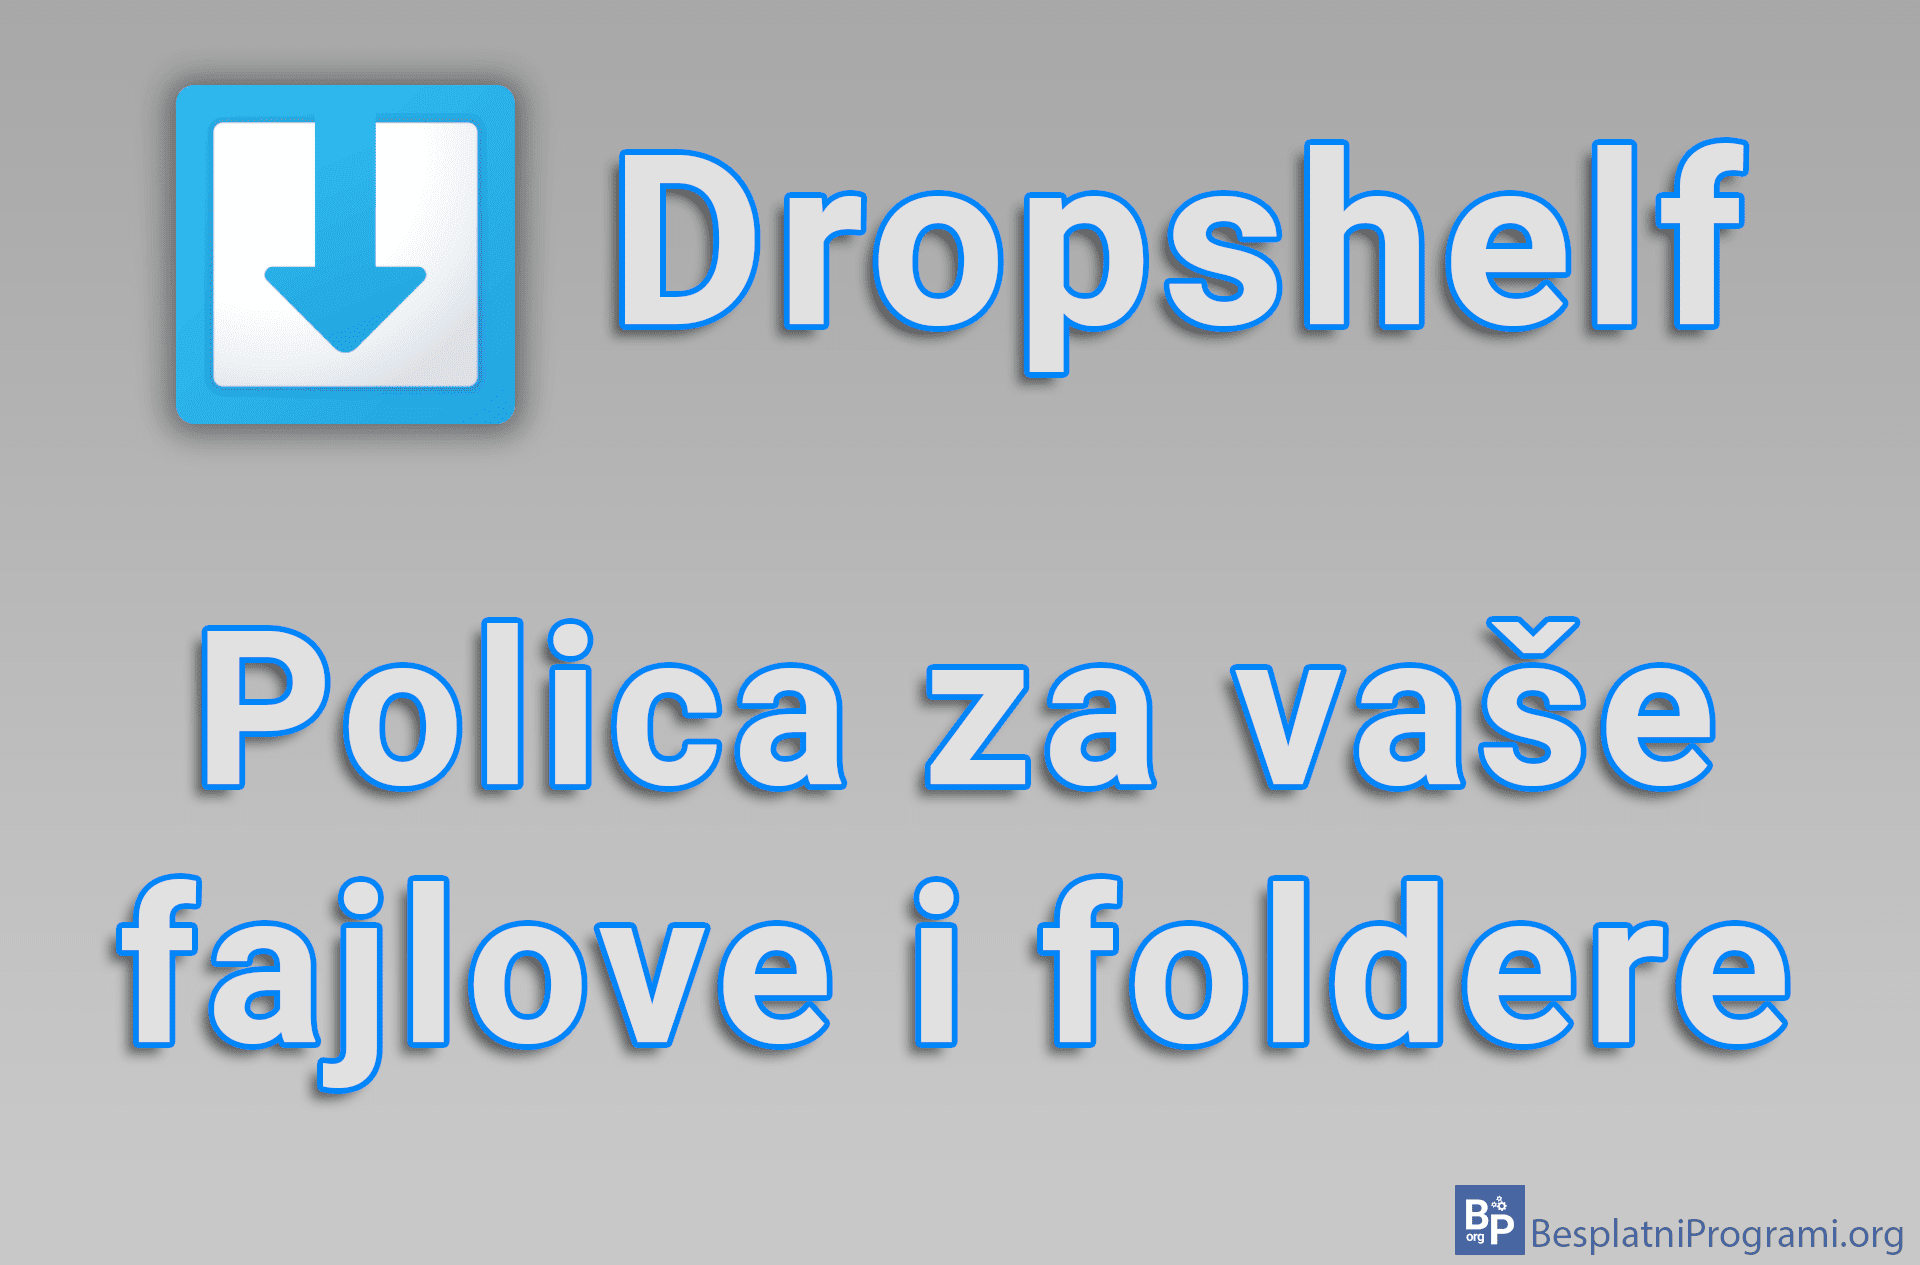 Dropshelf - Polica za vaše fajlove i foldere